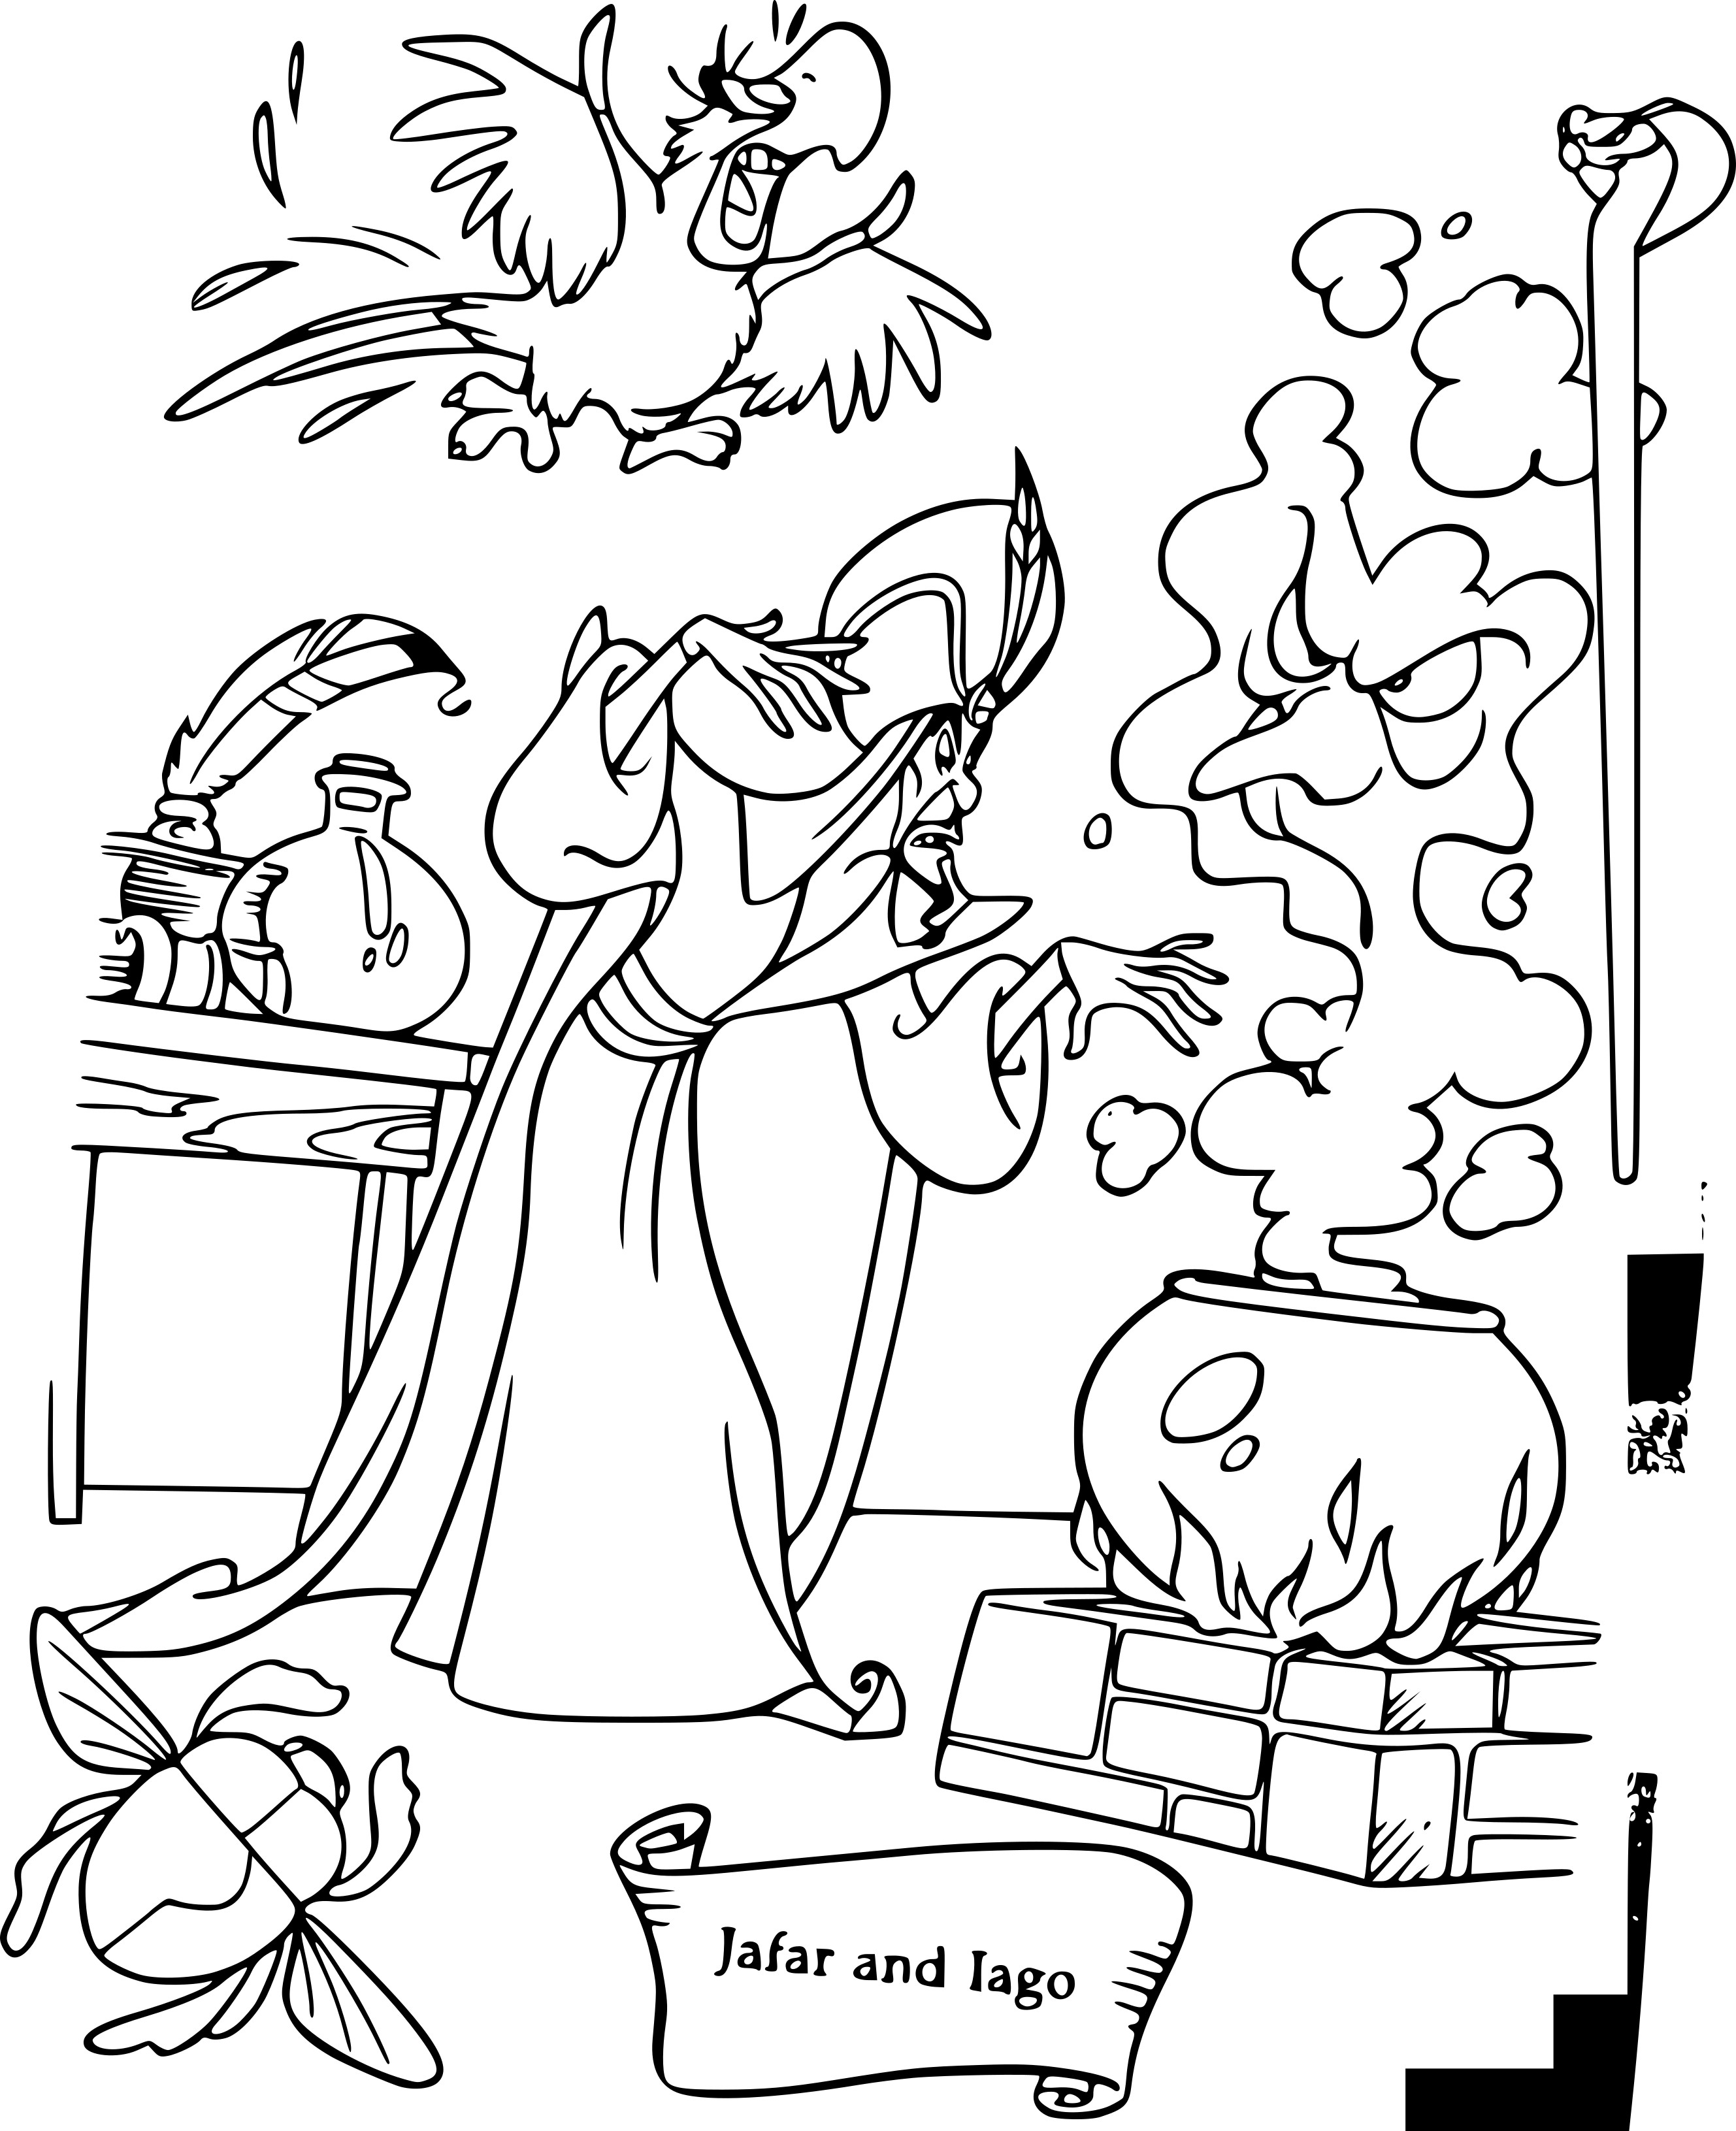 Jafar coloring page